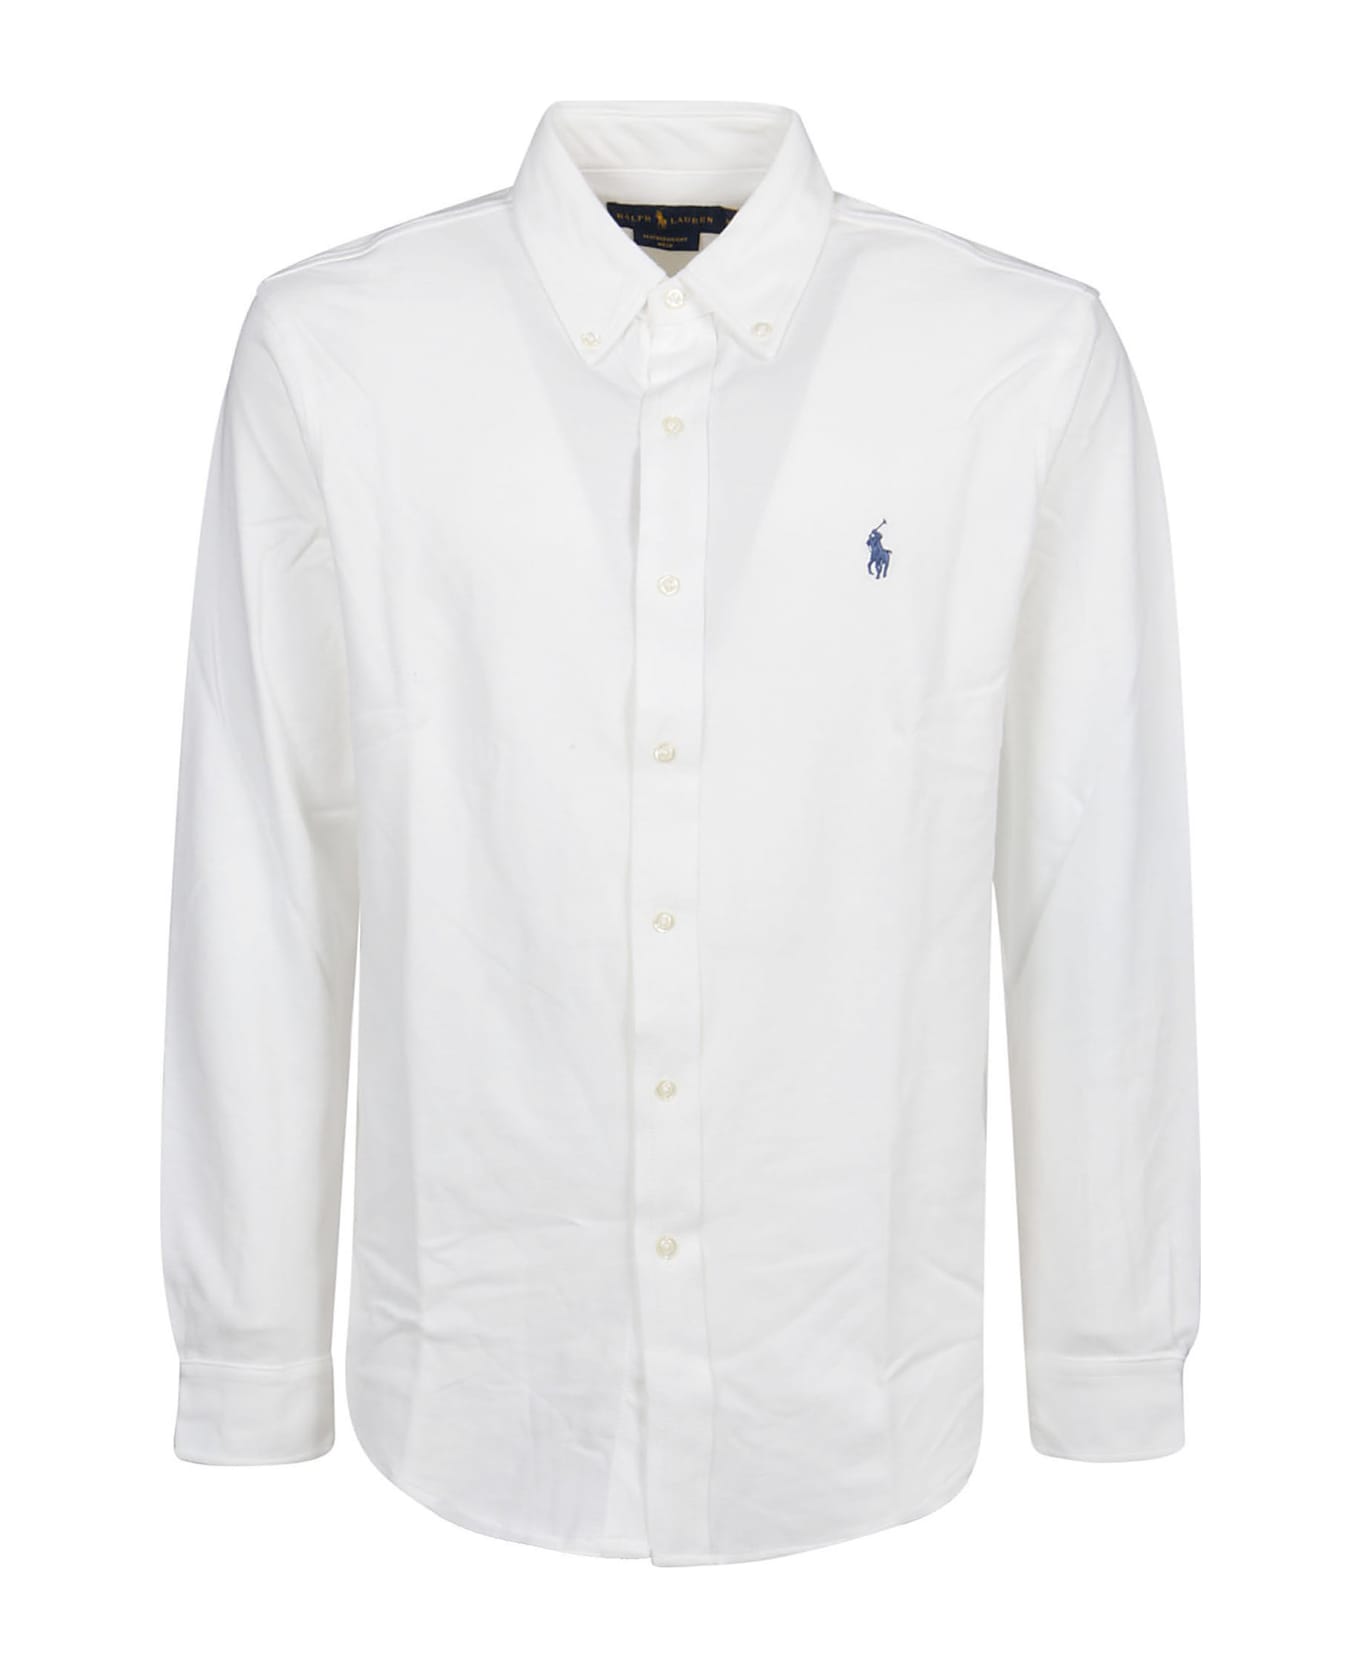 Polo Ralph Lauren Long Sleeve Shirt - White シャツ